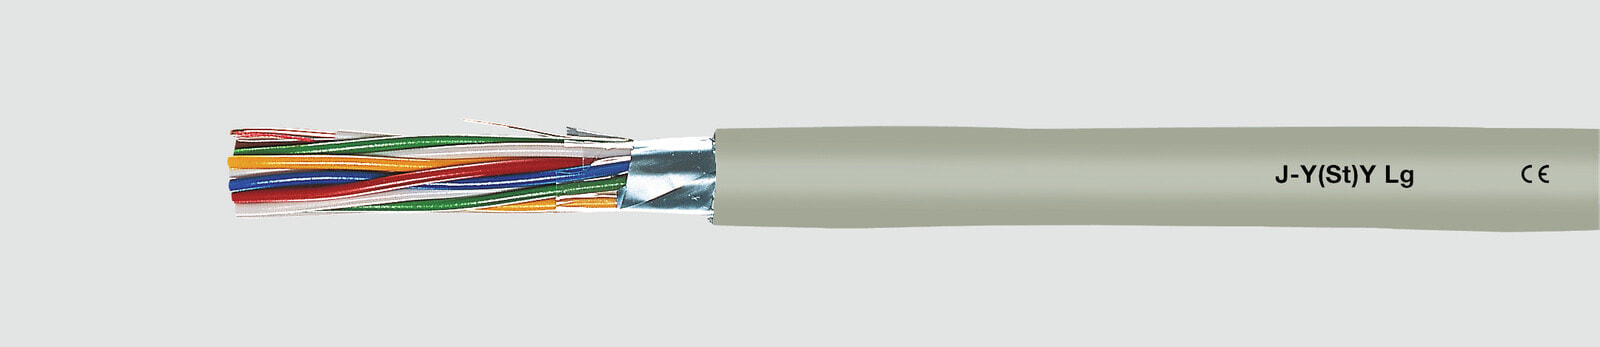 Helukabel 33005 - Low voltage cable - Grey - Polyvinyl chloride (PVC) - Cooper - 0.6 mm² - 35 kg/km